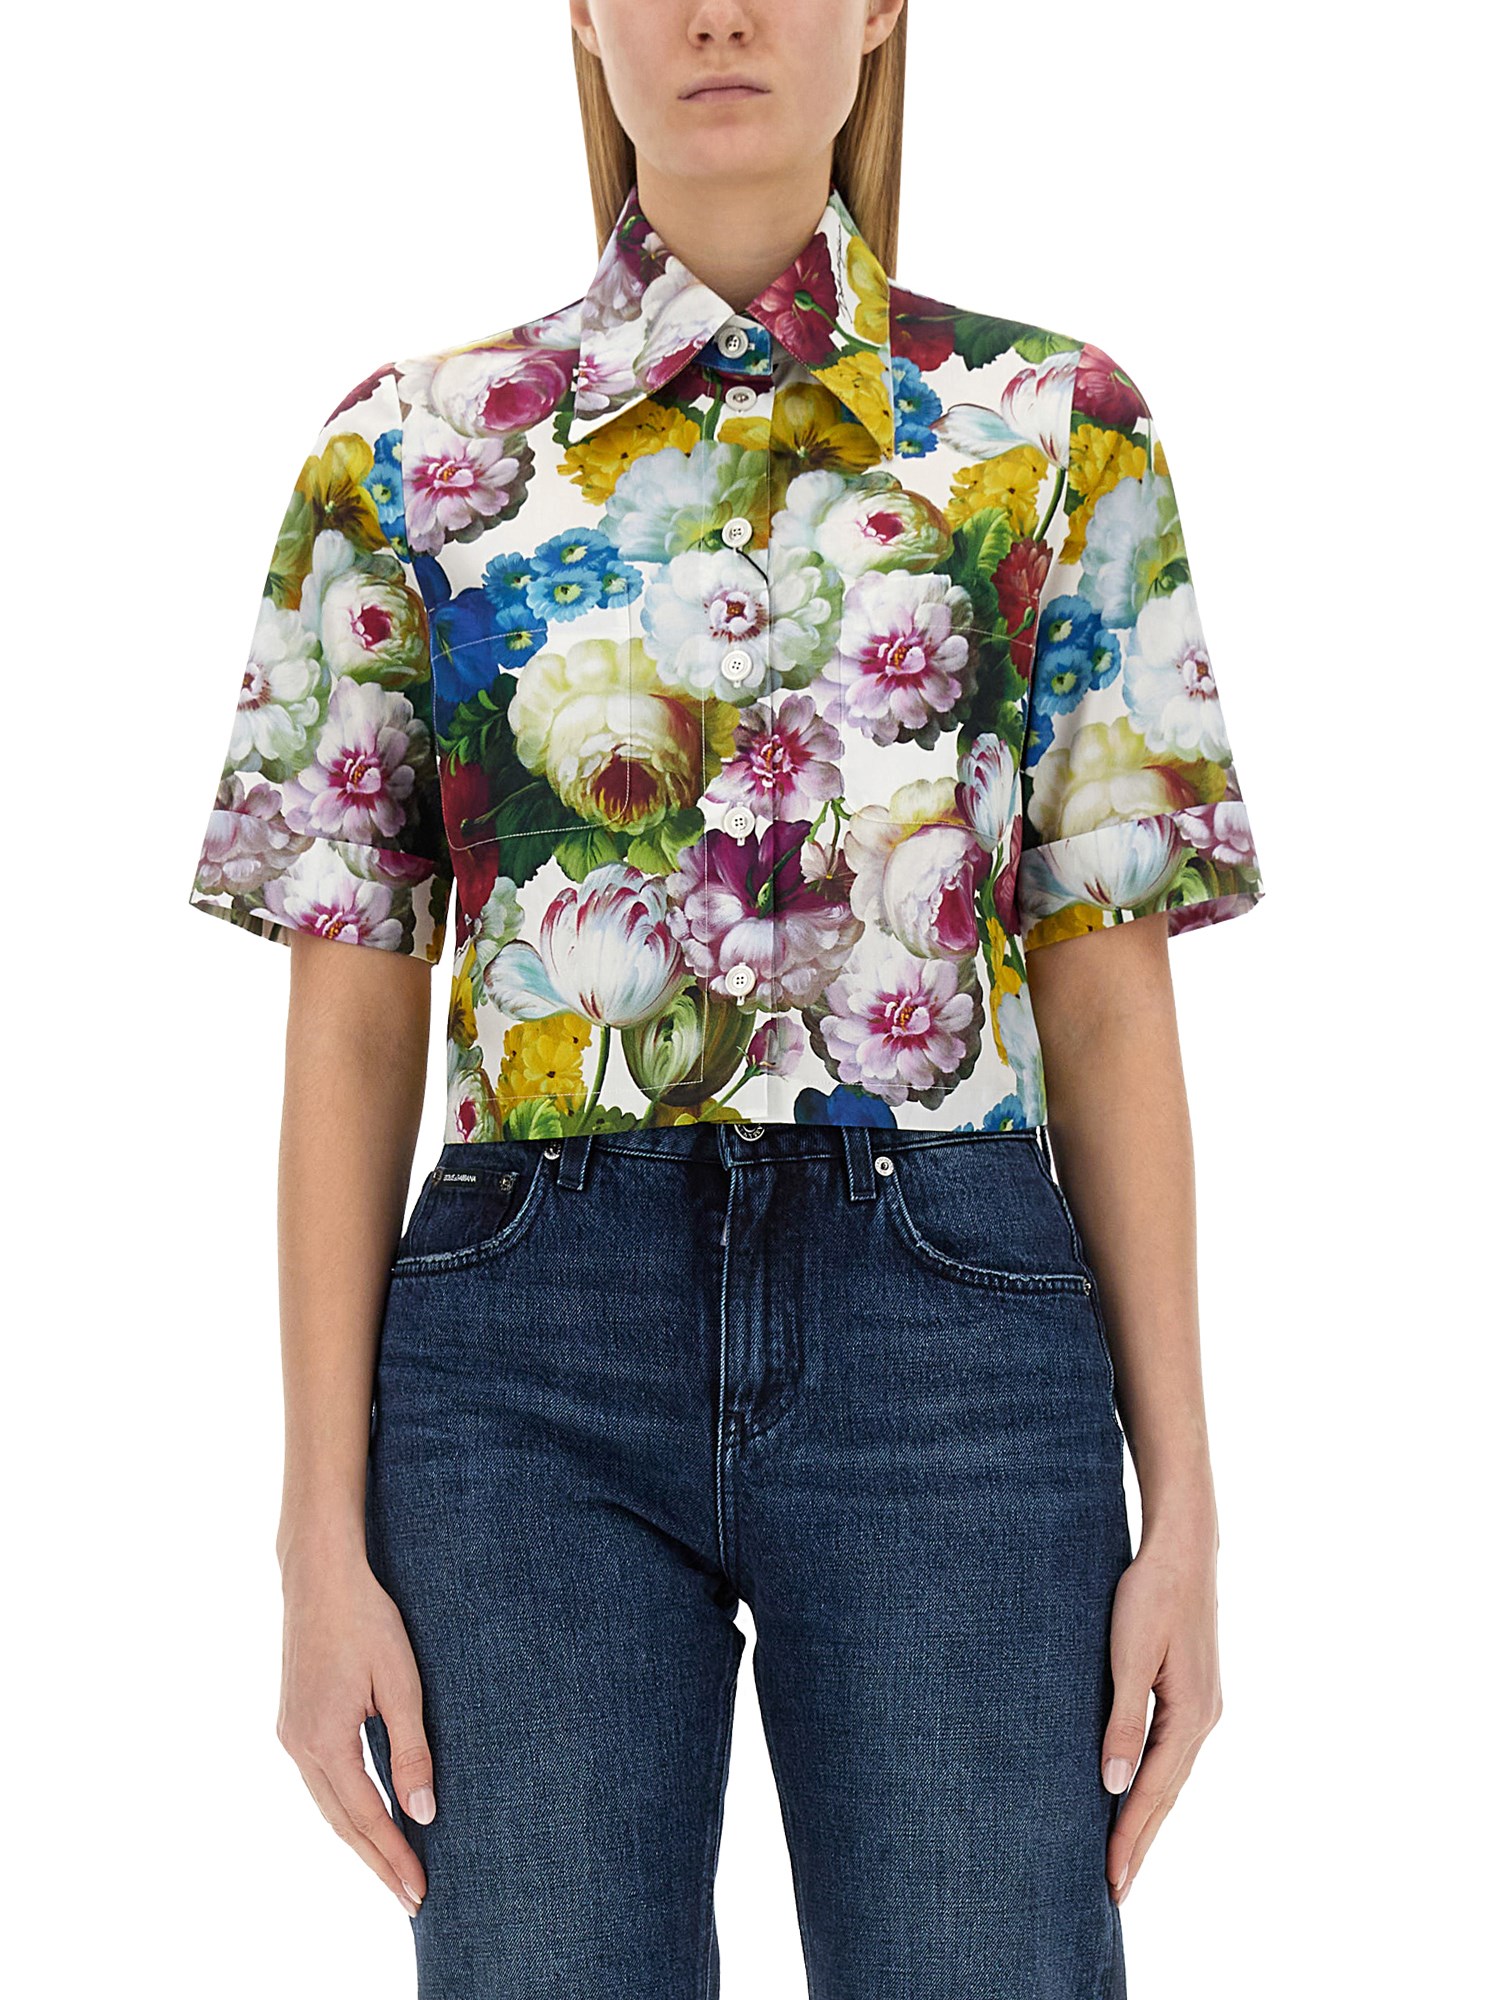 dolce & gabbana night flower print shirt